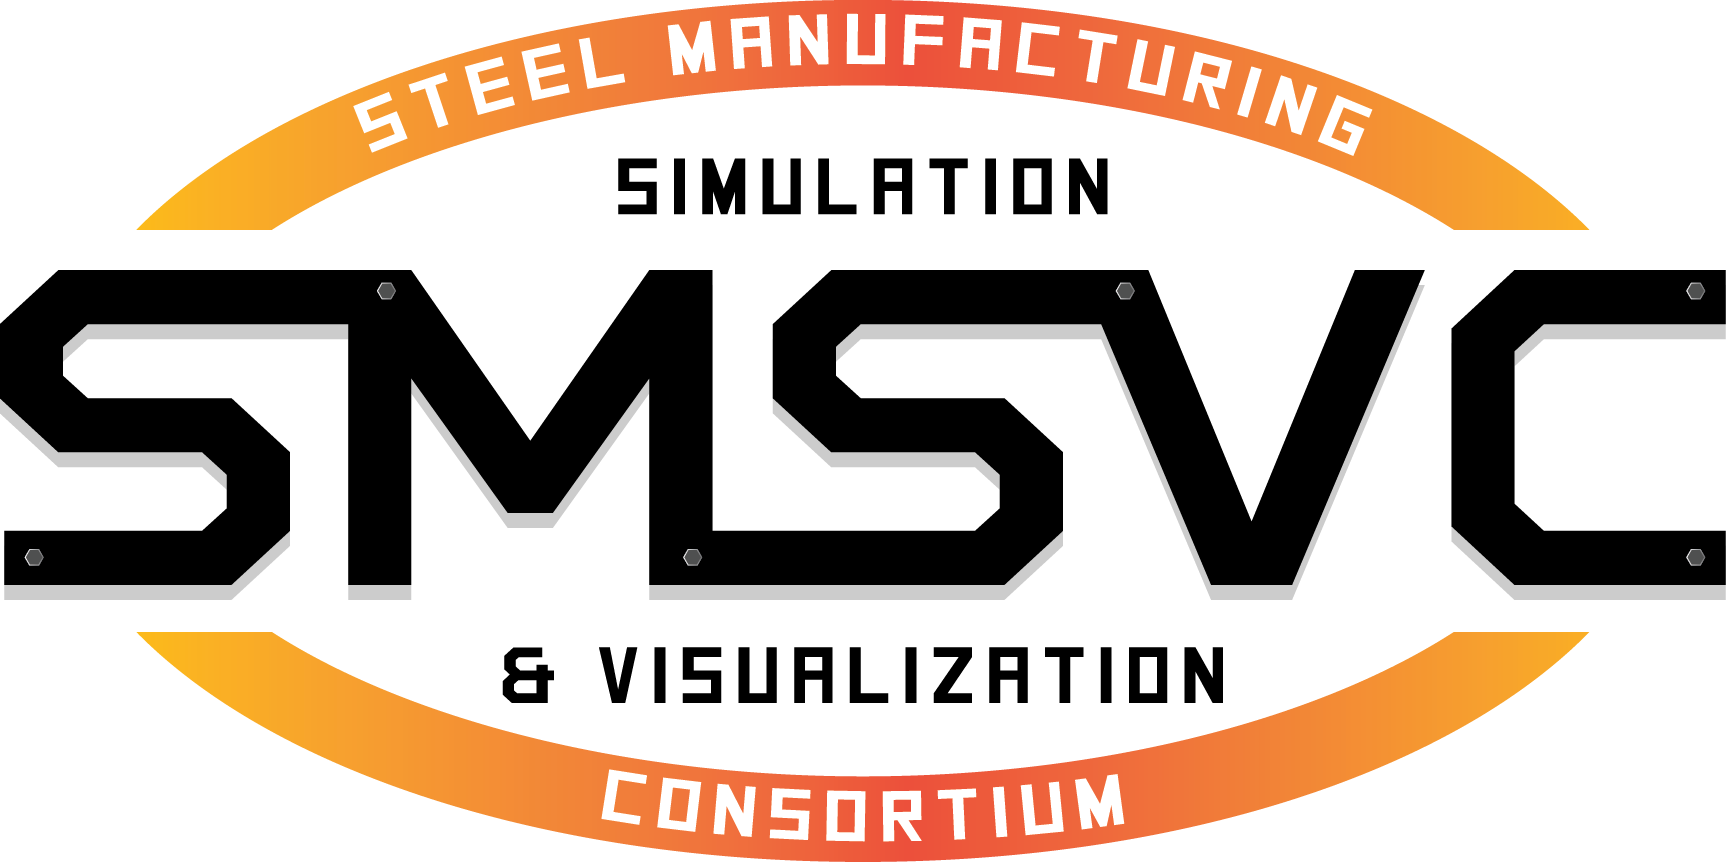 Steel Manufacturing Simulation and Visualization Consortium